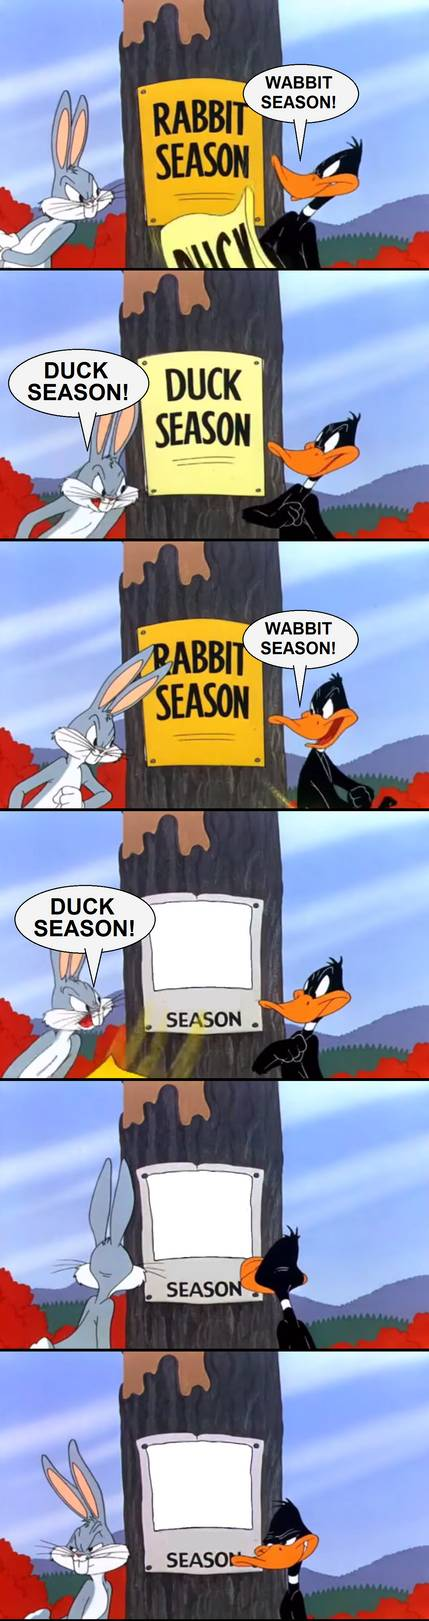 wabbit season duck season elmer season Blank Meme Template